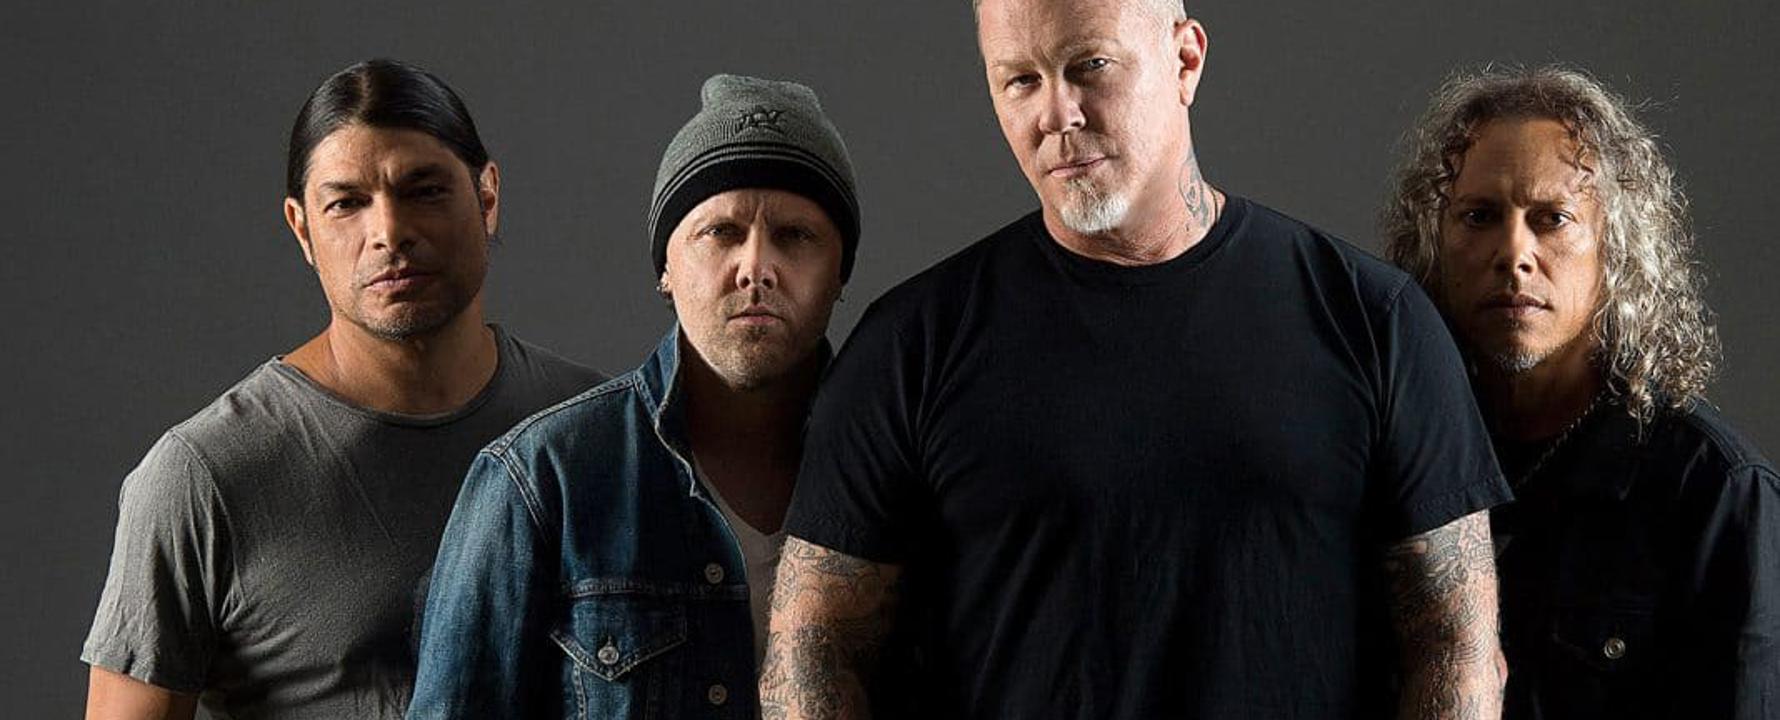 Promotional photograph of Metallica.